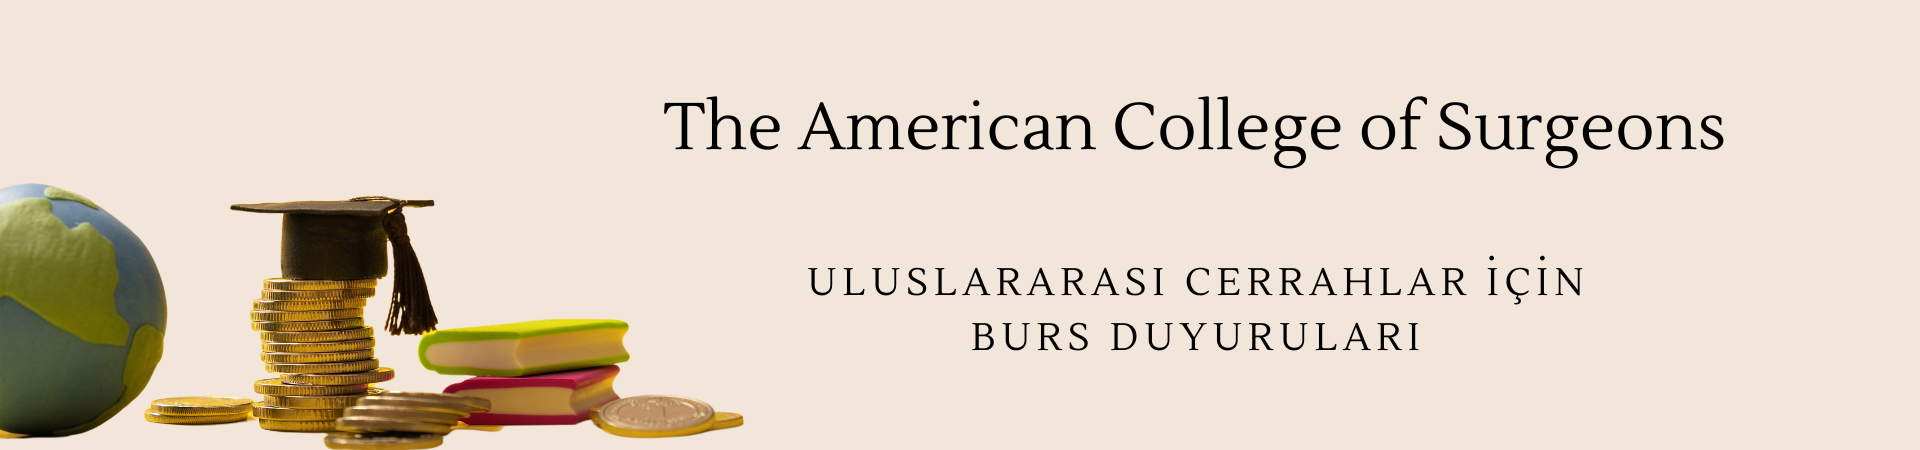 The American College of Surgeons Bursları